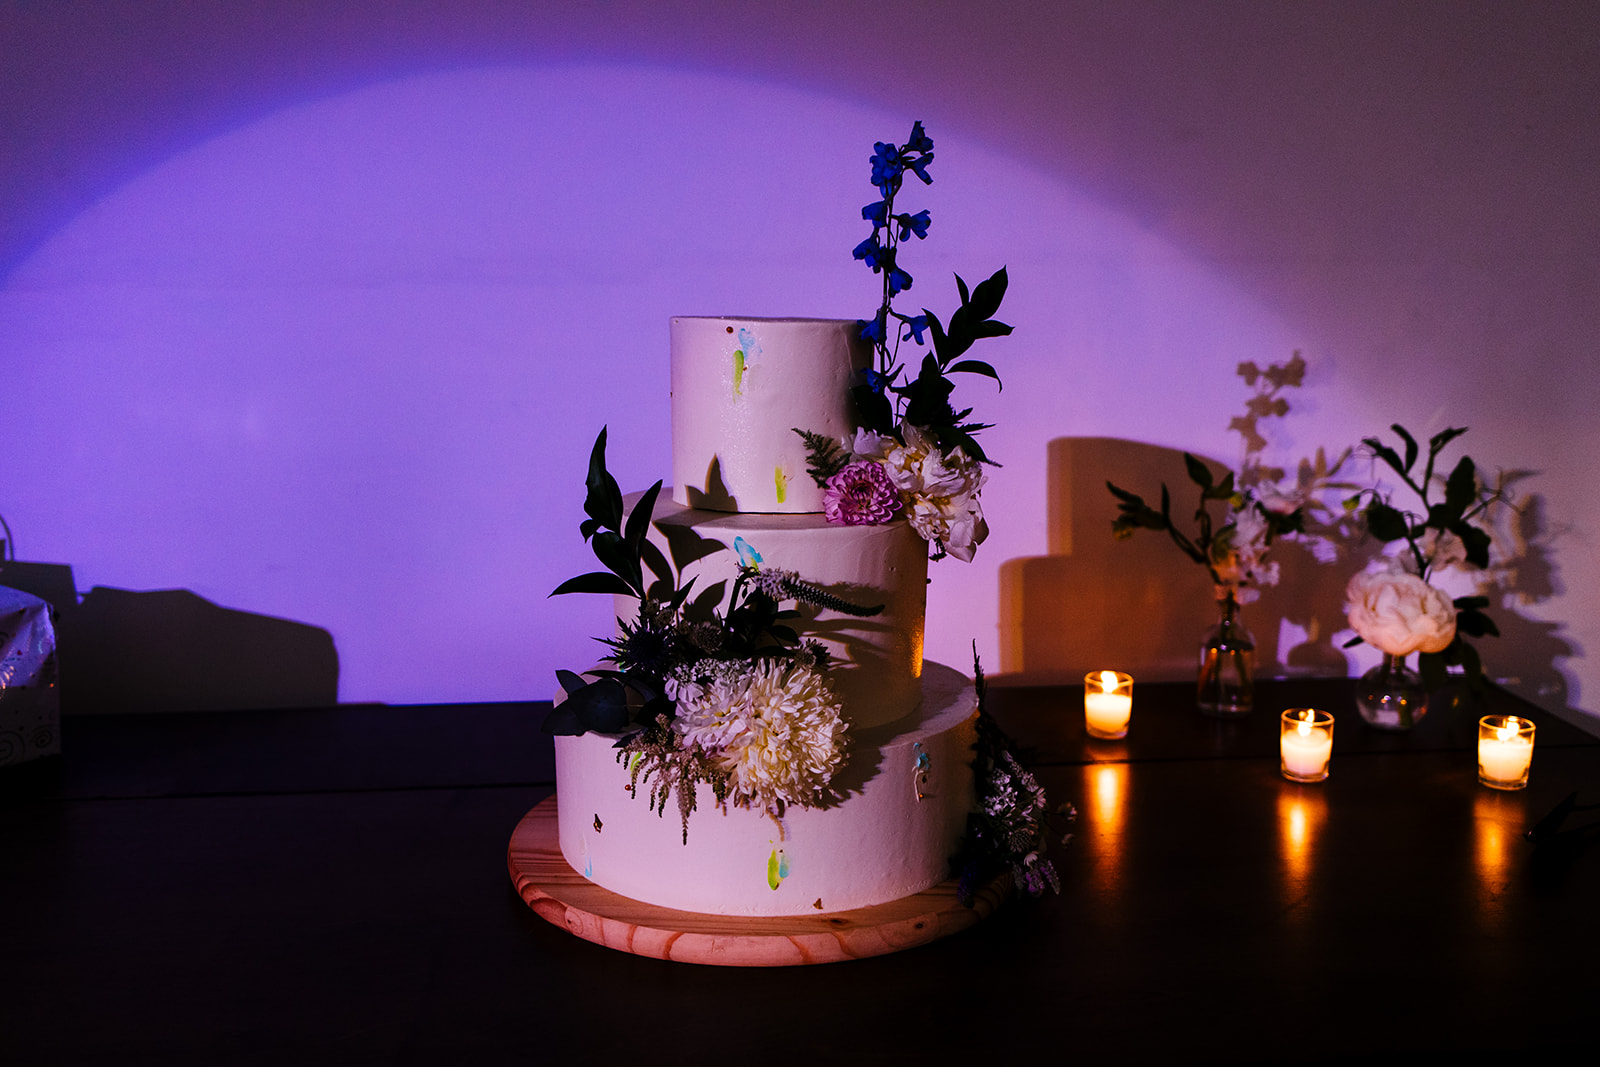 A colorful wedding cake